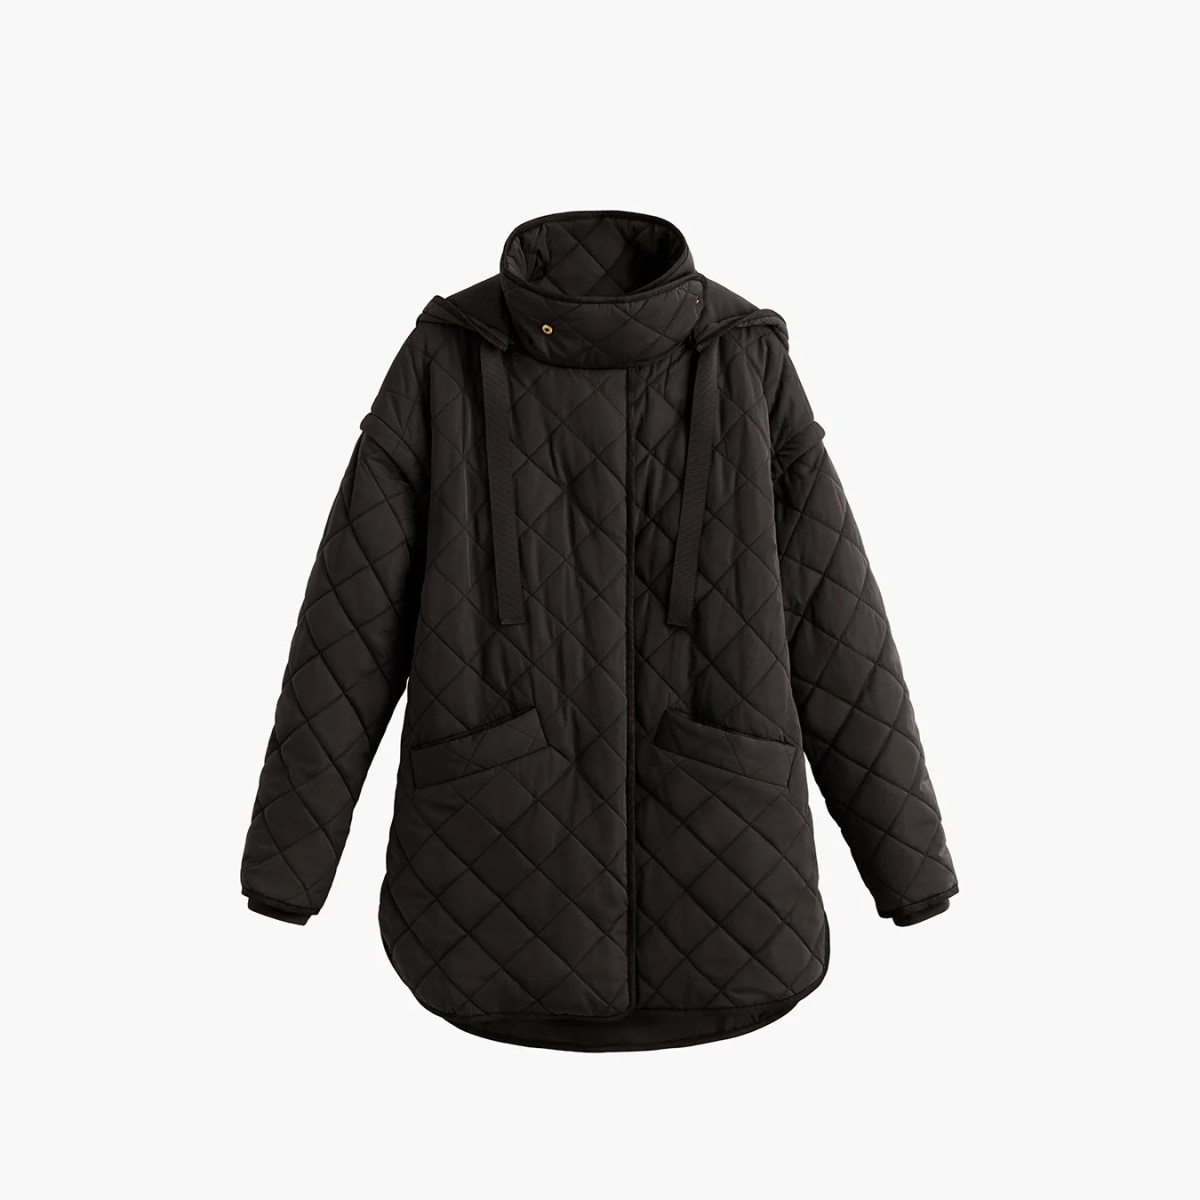 womens coats - Google Search  Stylish winter coats, Winter coats